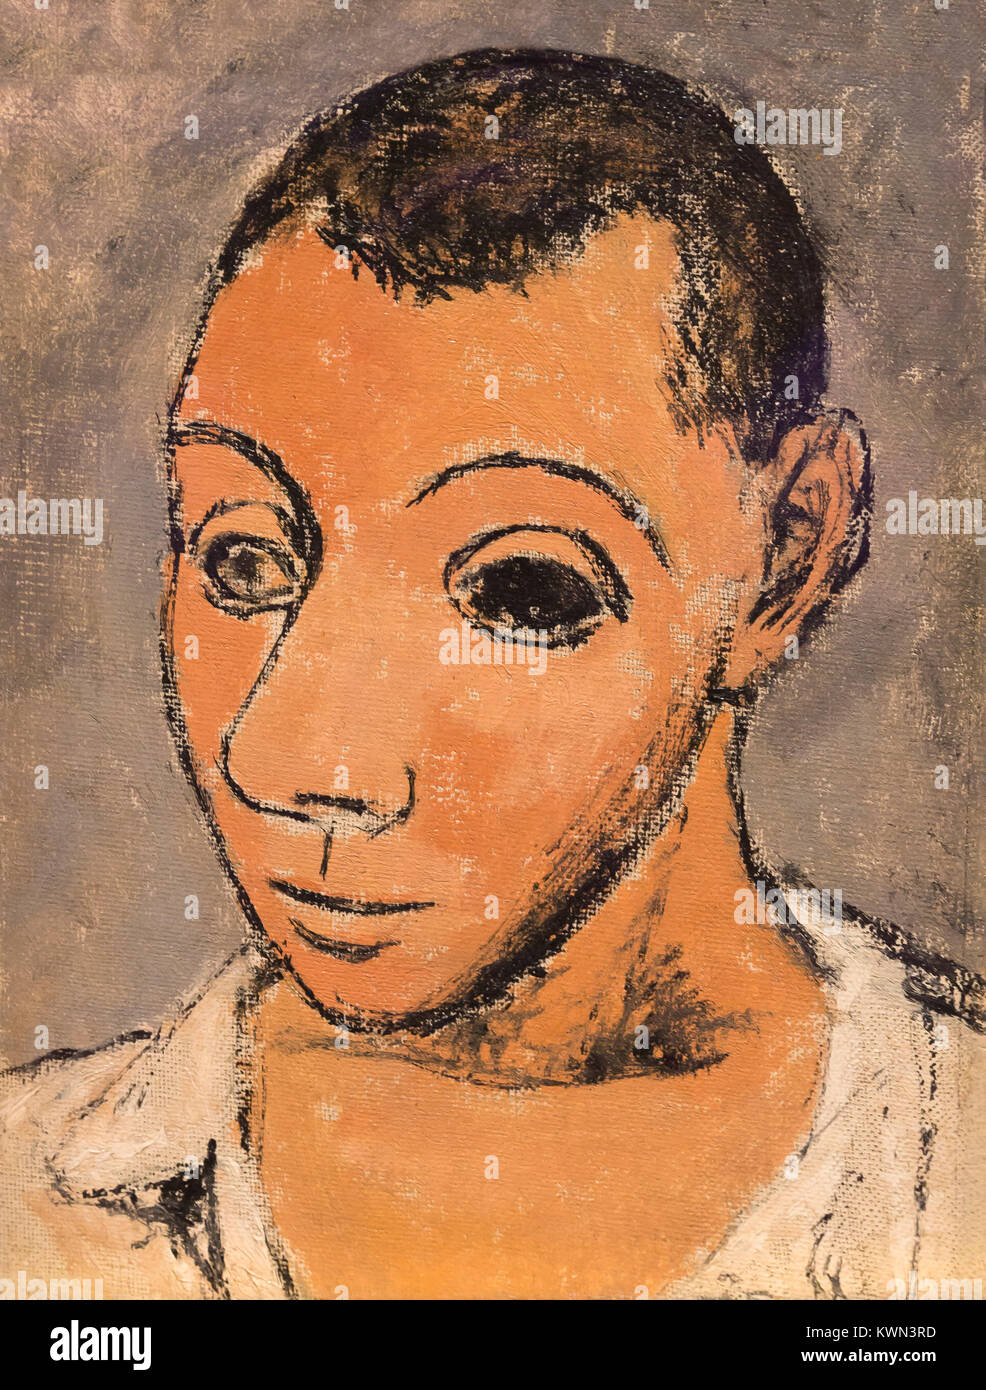 Selbstportrait, Pablo Picasso, 1906 Stockfotografie - Alamy